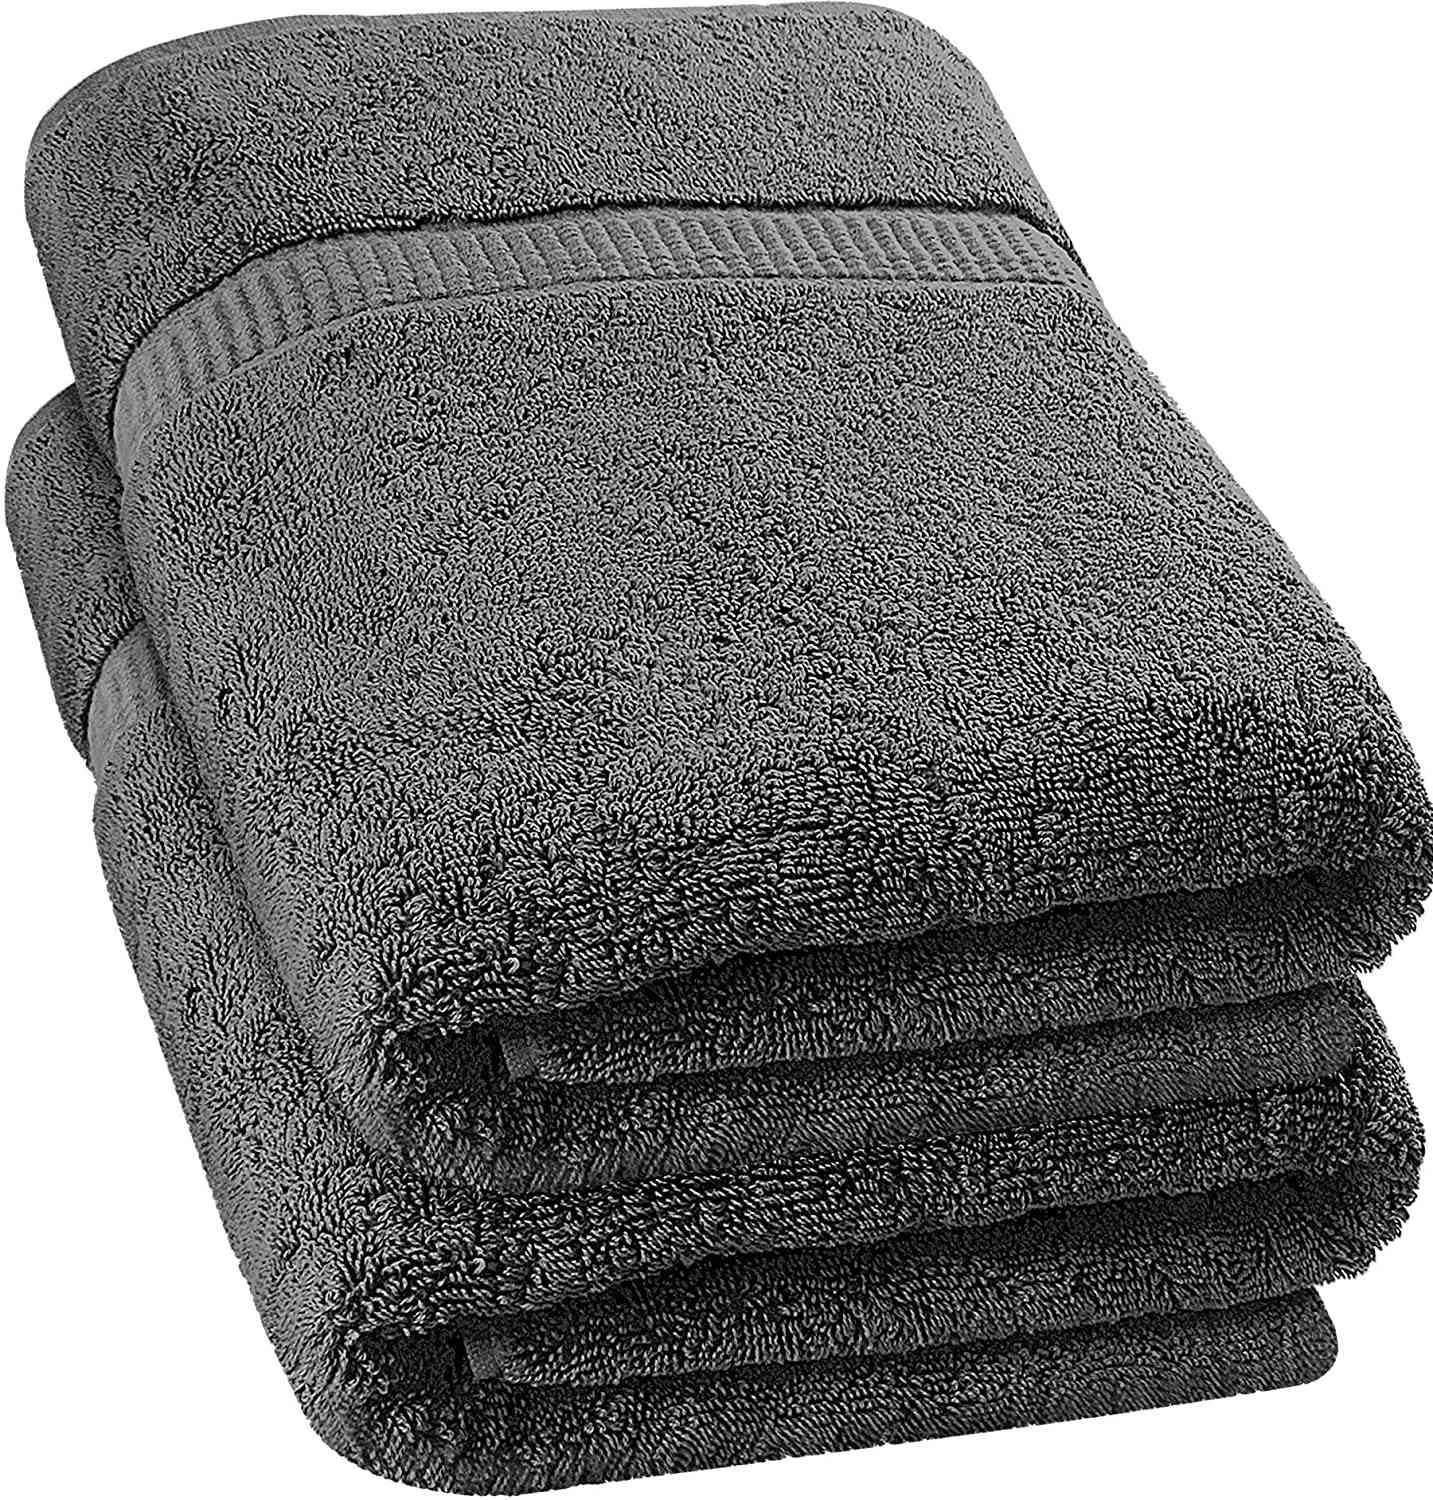 folded dark gray large bath towels